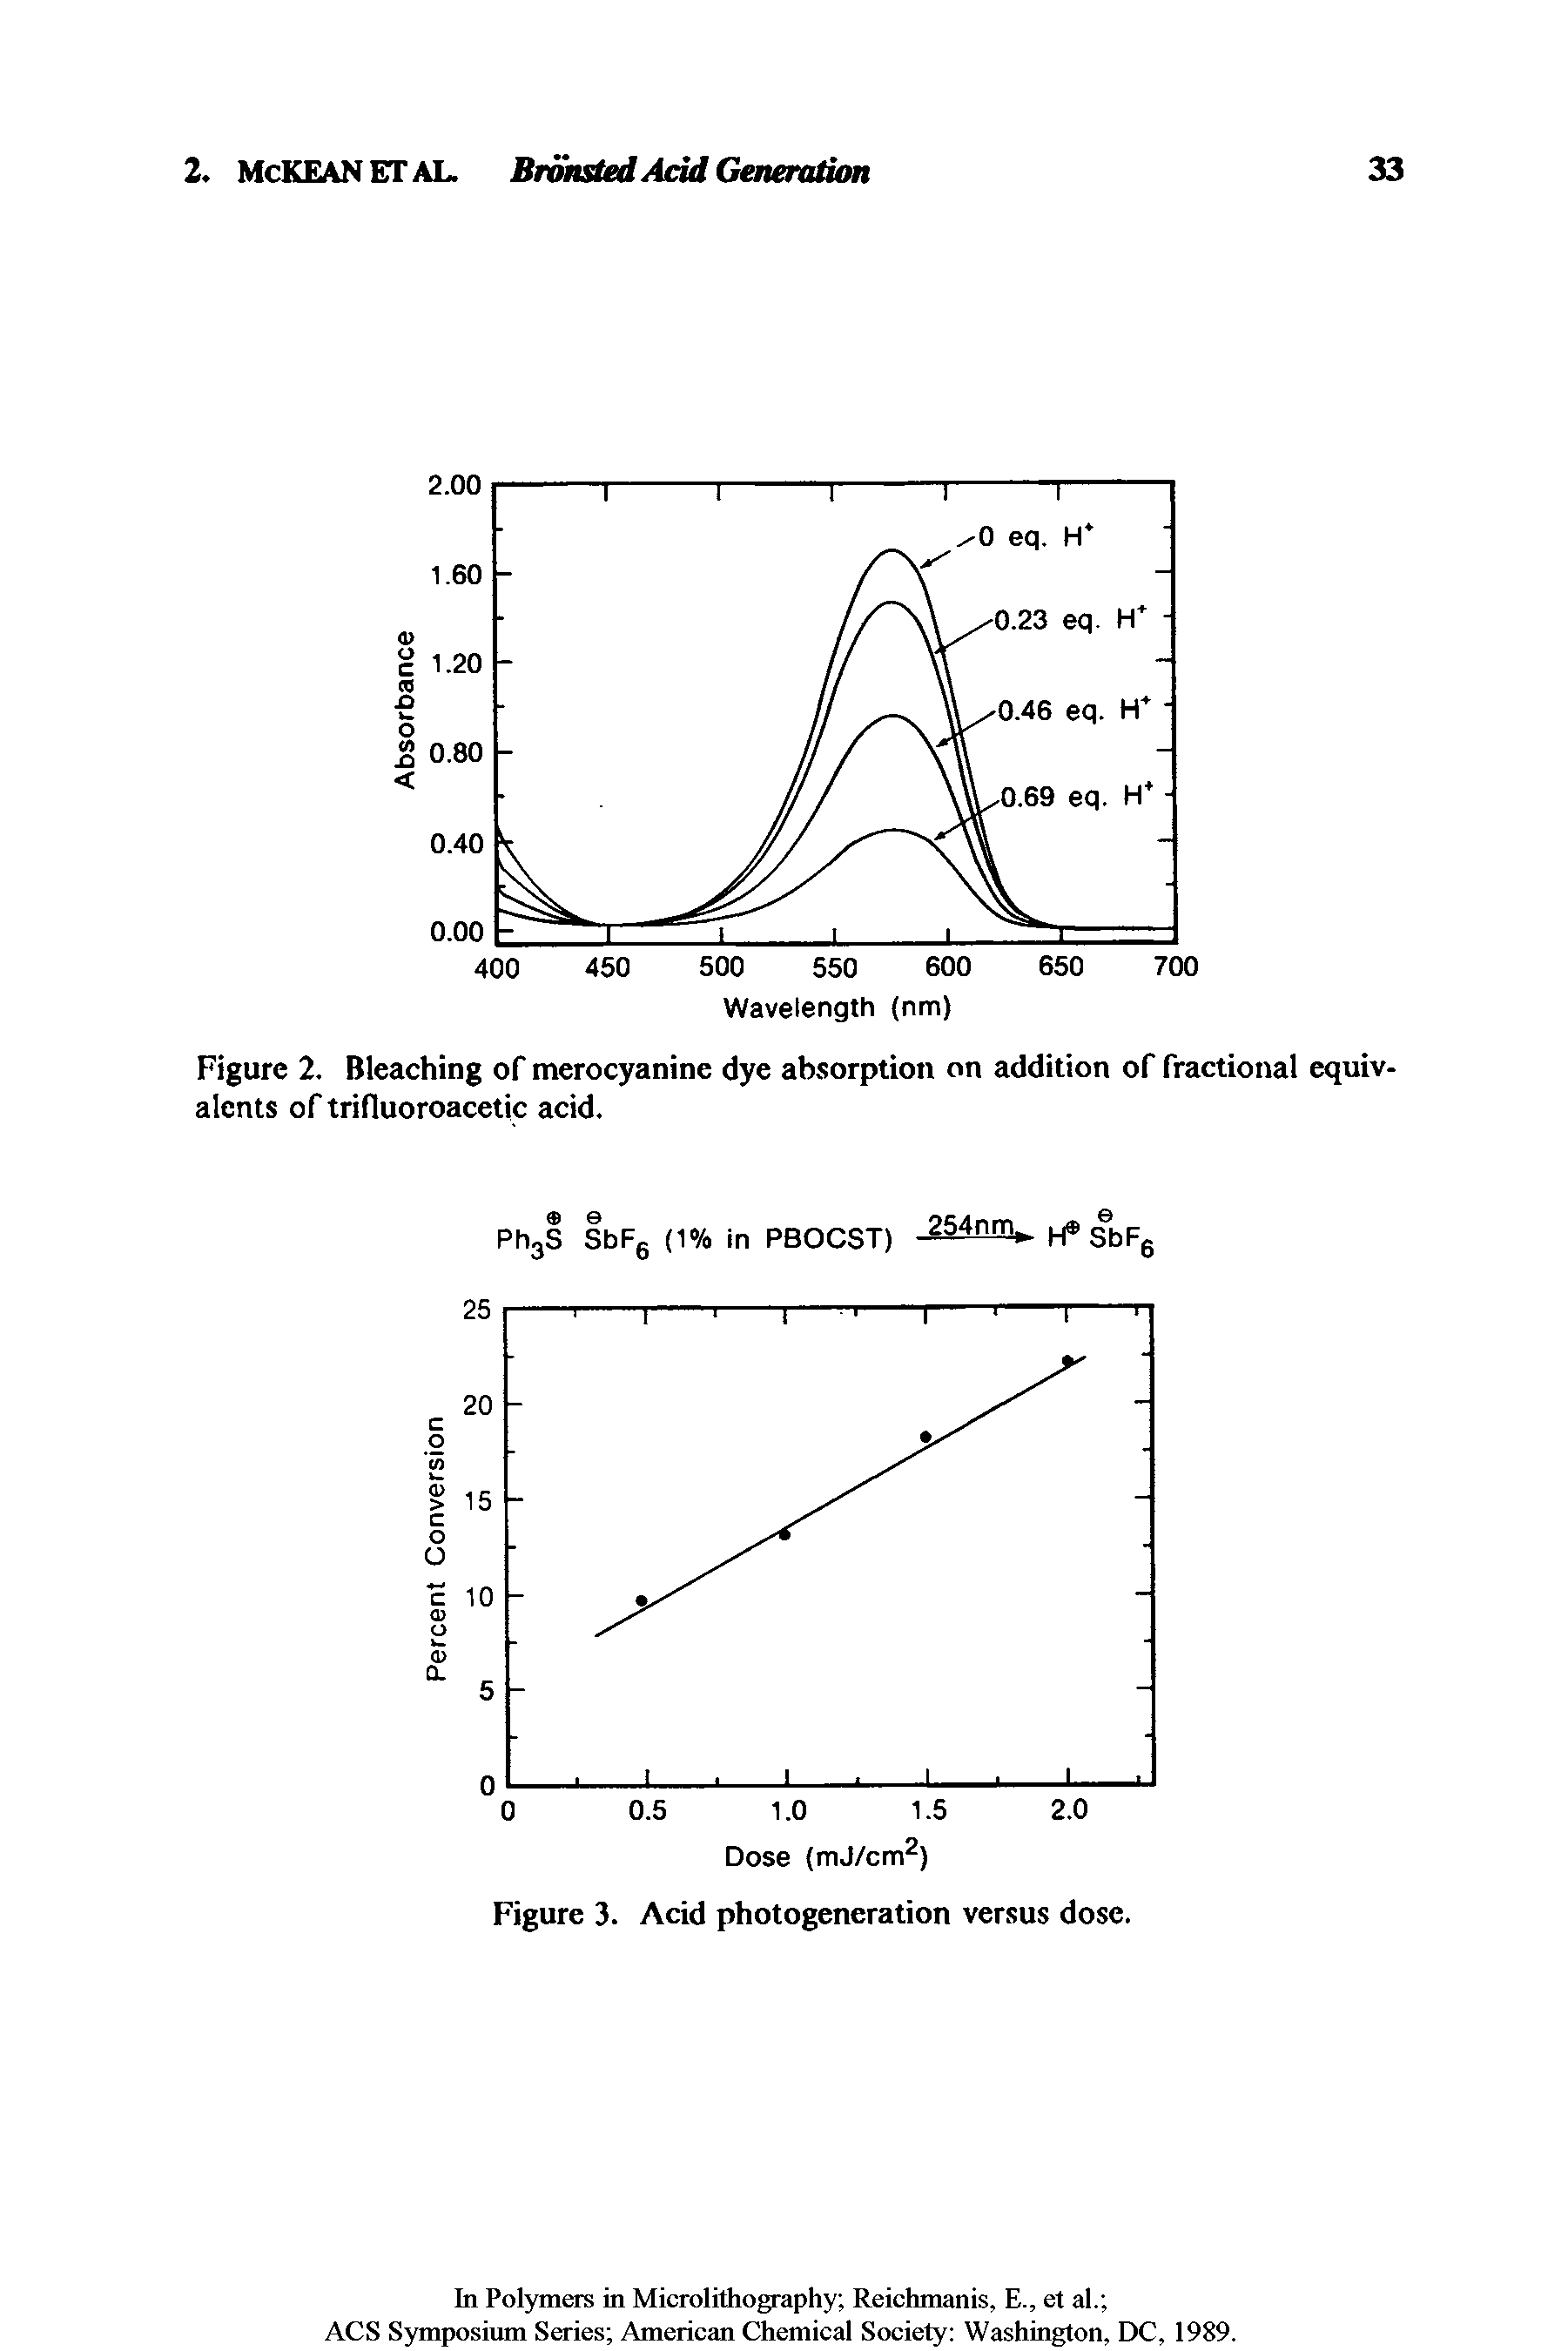 Figure 2. Bleaching of merocyanine dye absorption on addition of fractional equivalents of trifluoroacetic acid.